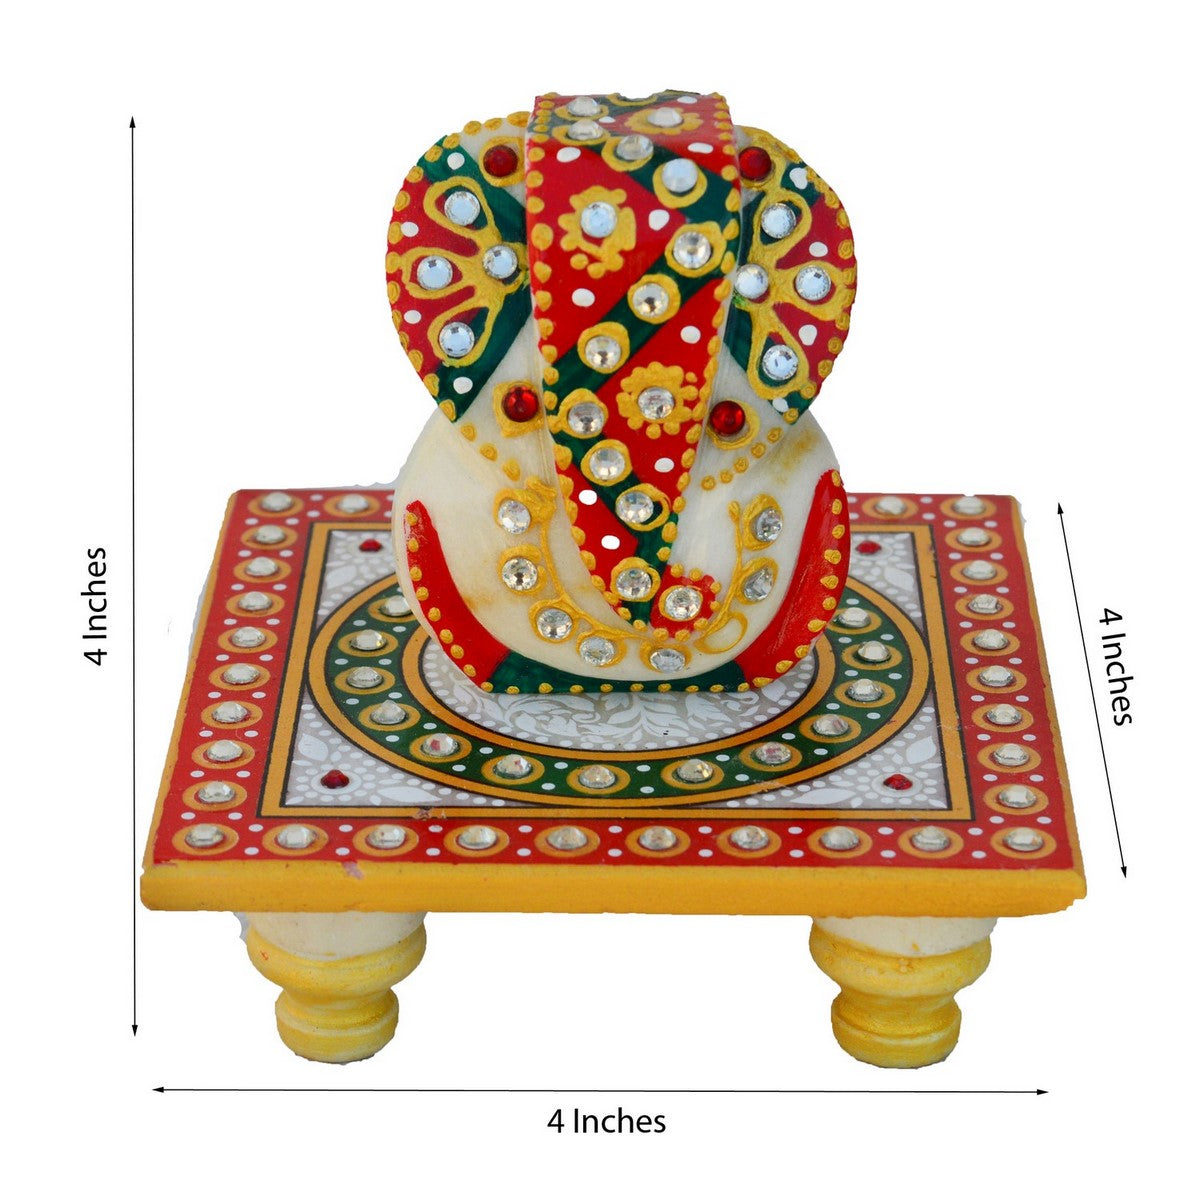 Designer Wooden Dildar Bhai Rakhi with Lord Ganesha on Kundan Studded Marble Chowki and Roli Tikka Matki, Best Wishes Greeting Card 1